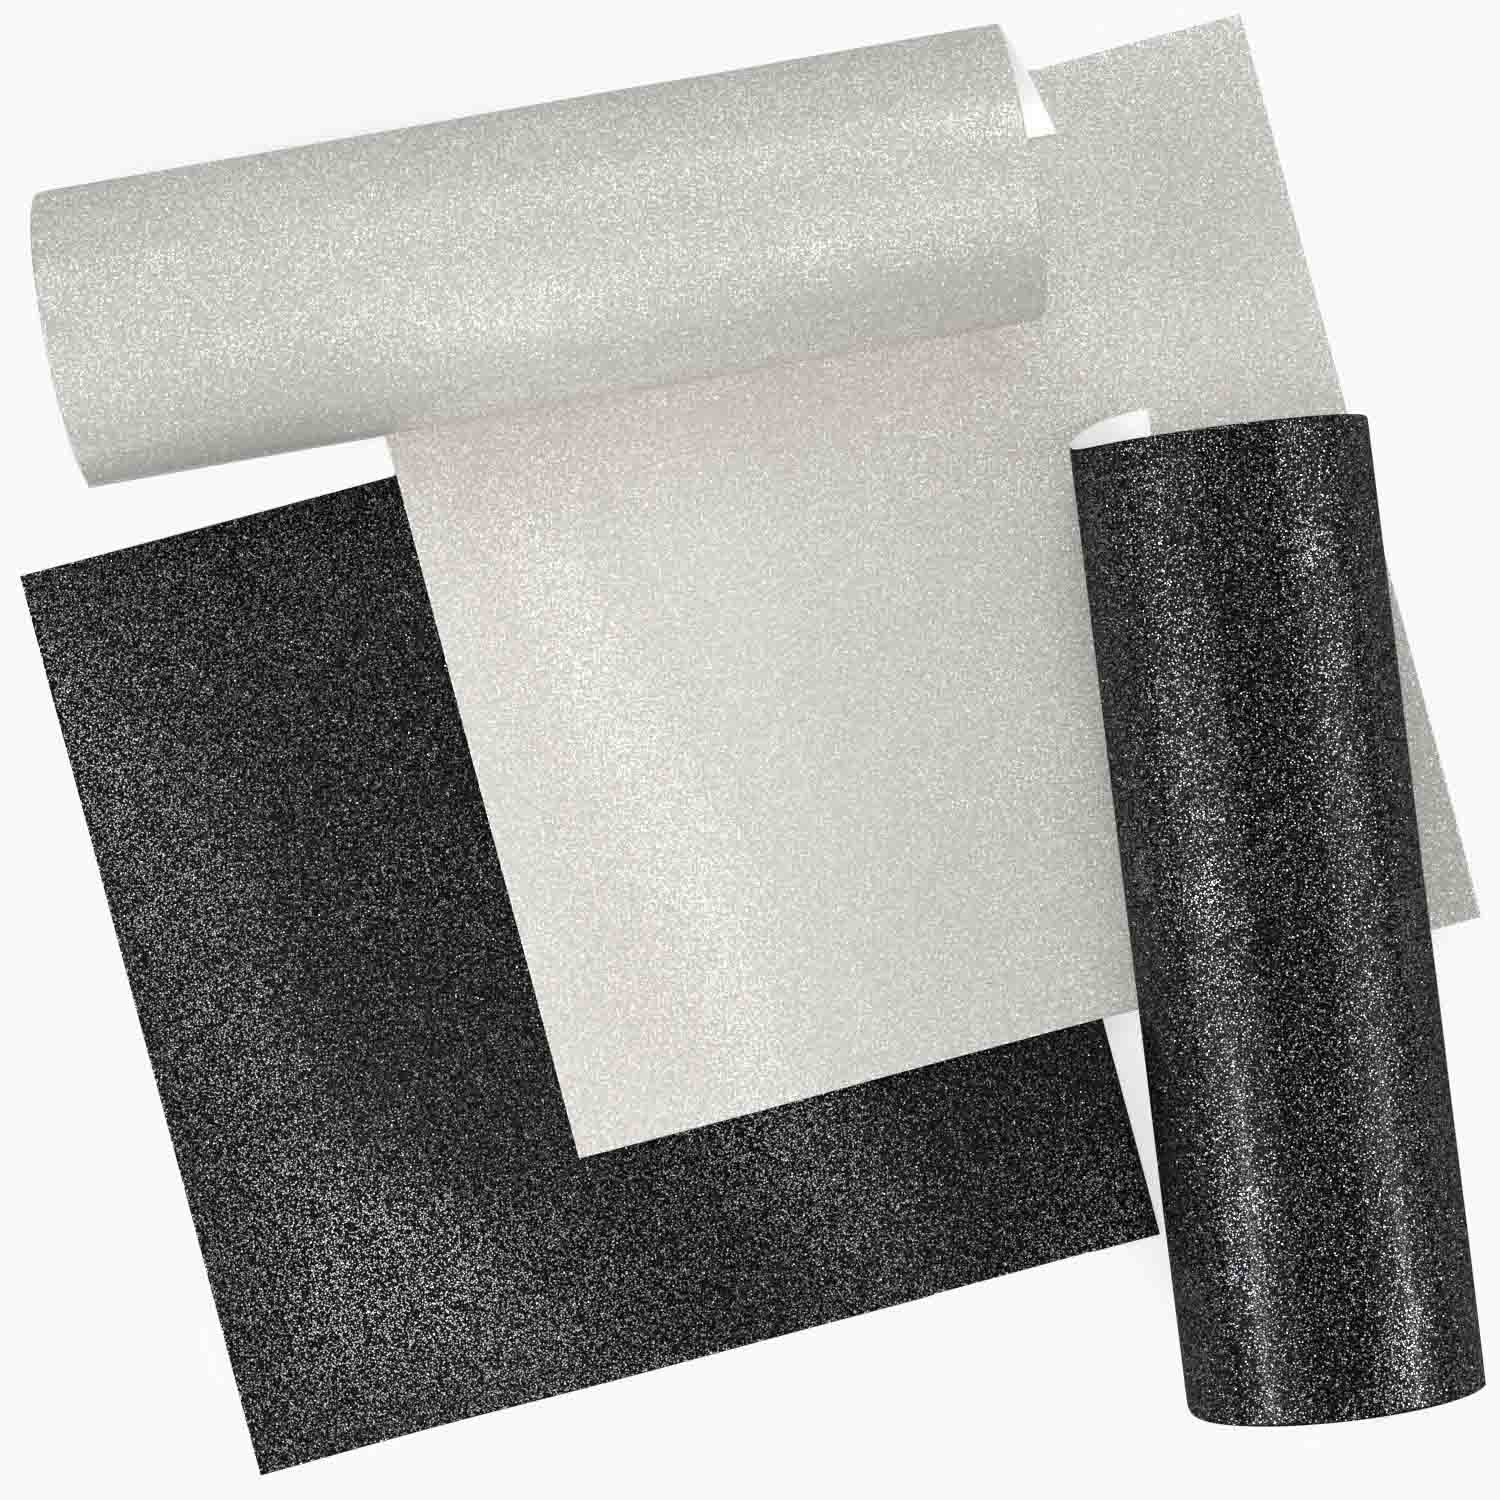 SILVER Mirri Sparkle 'No Mess' Glitter Paper – The 12x12 Cardstock